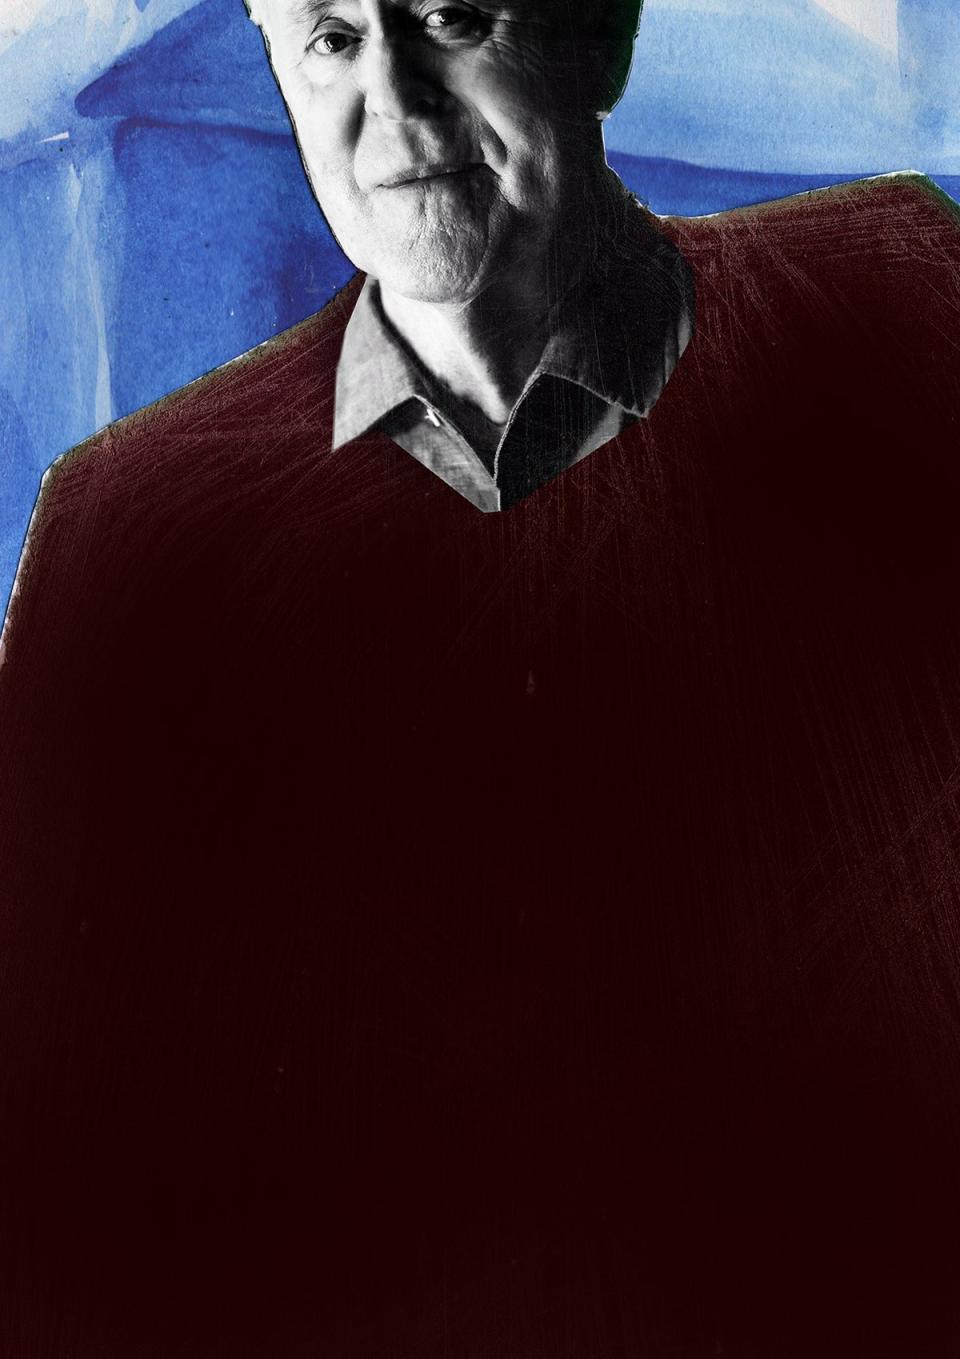 John Lithgow as Roald Dahl in the artwork for Giant